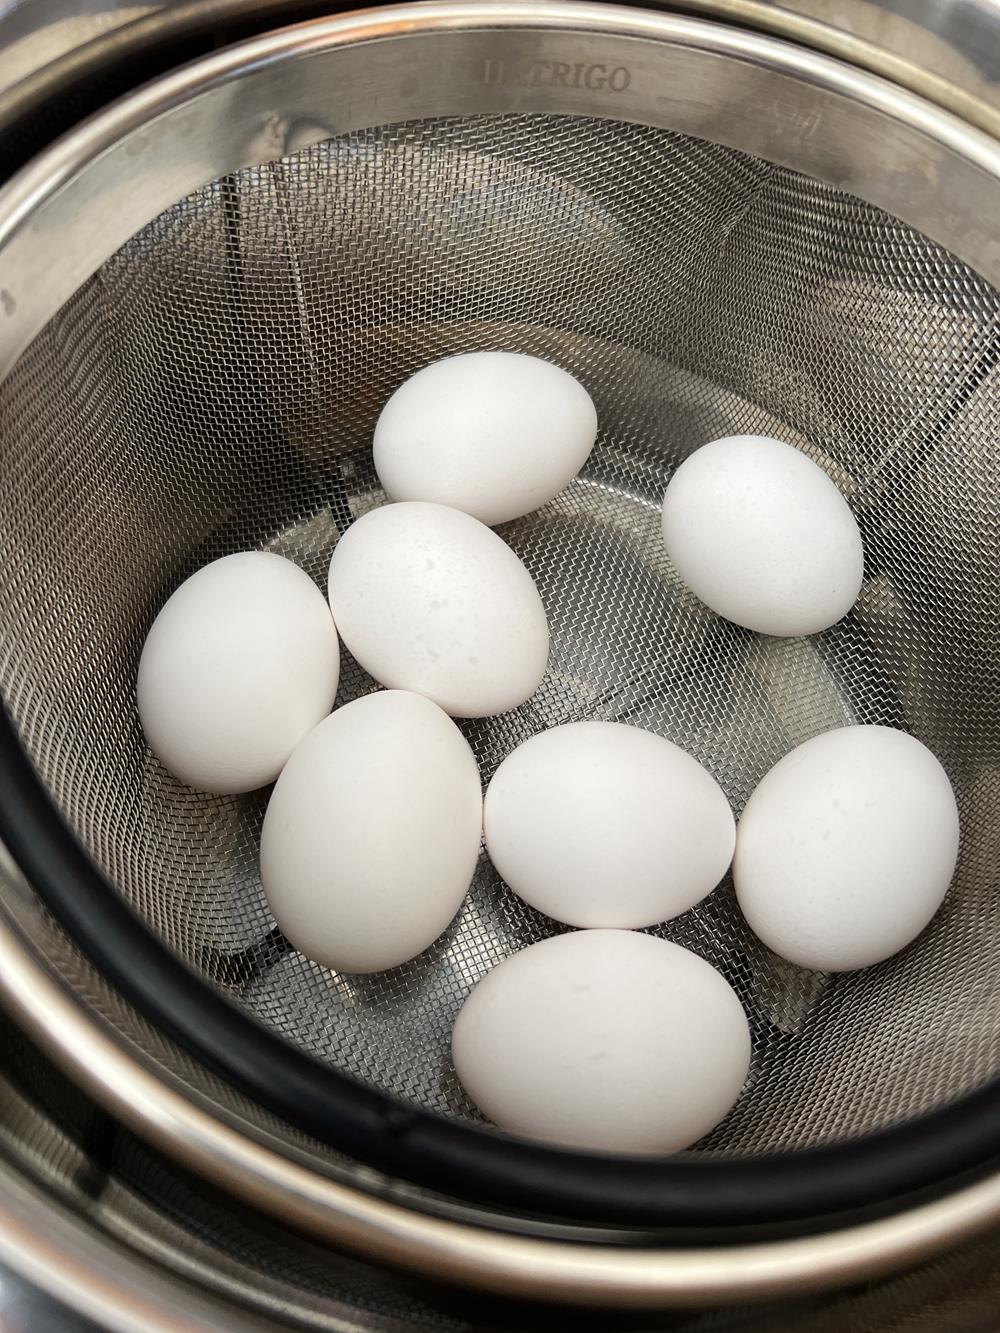 eggs in an instant pot insert